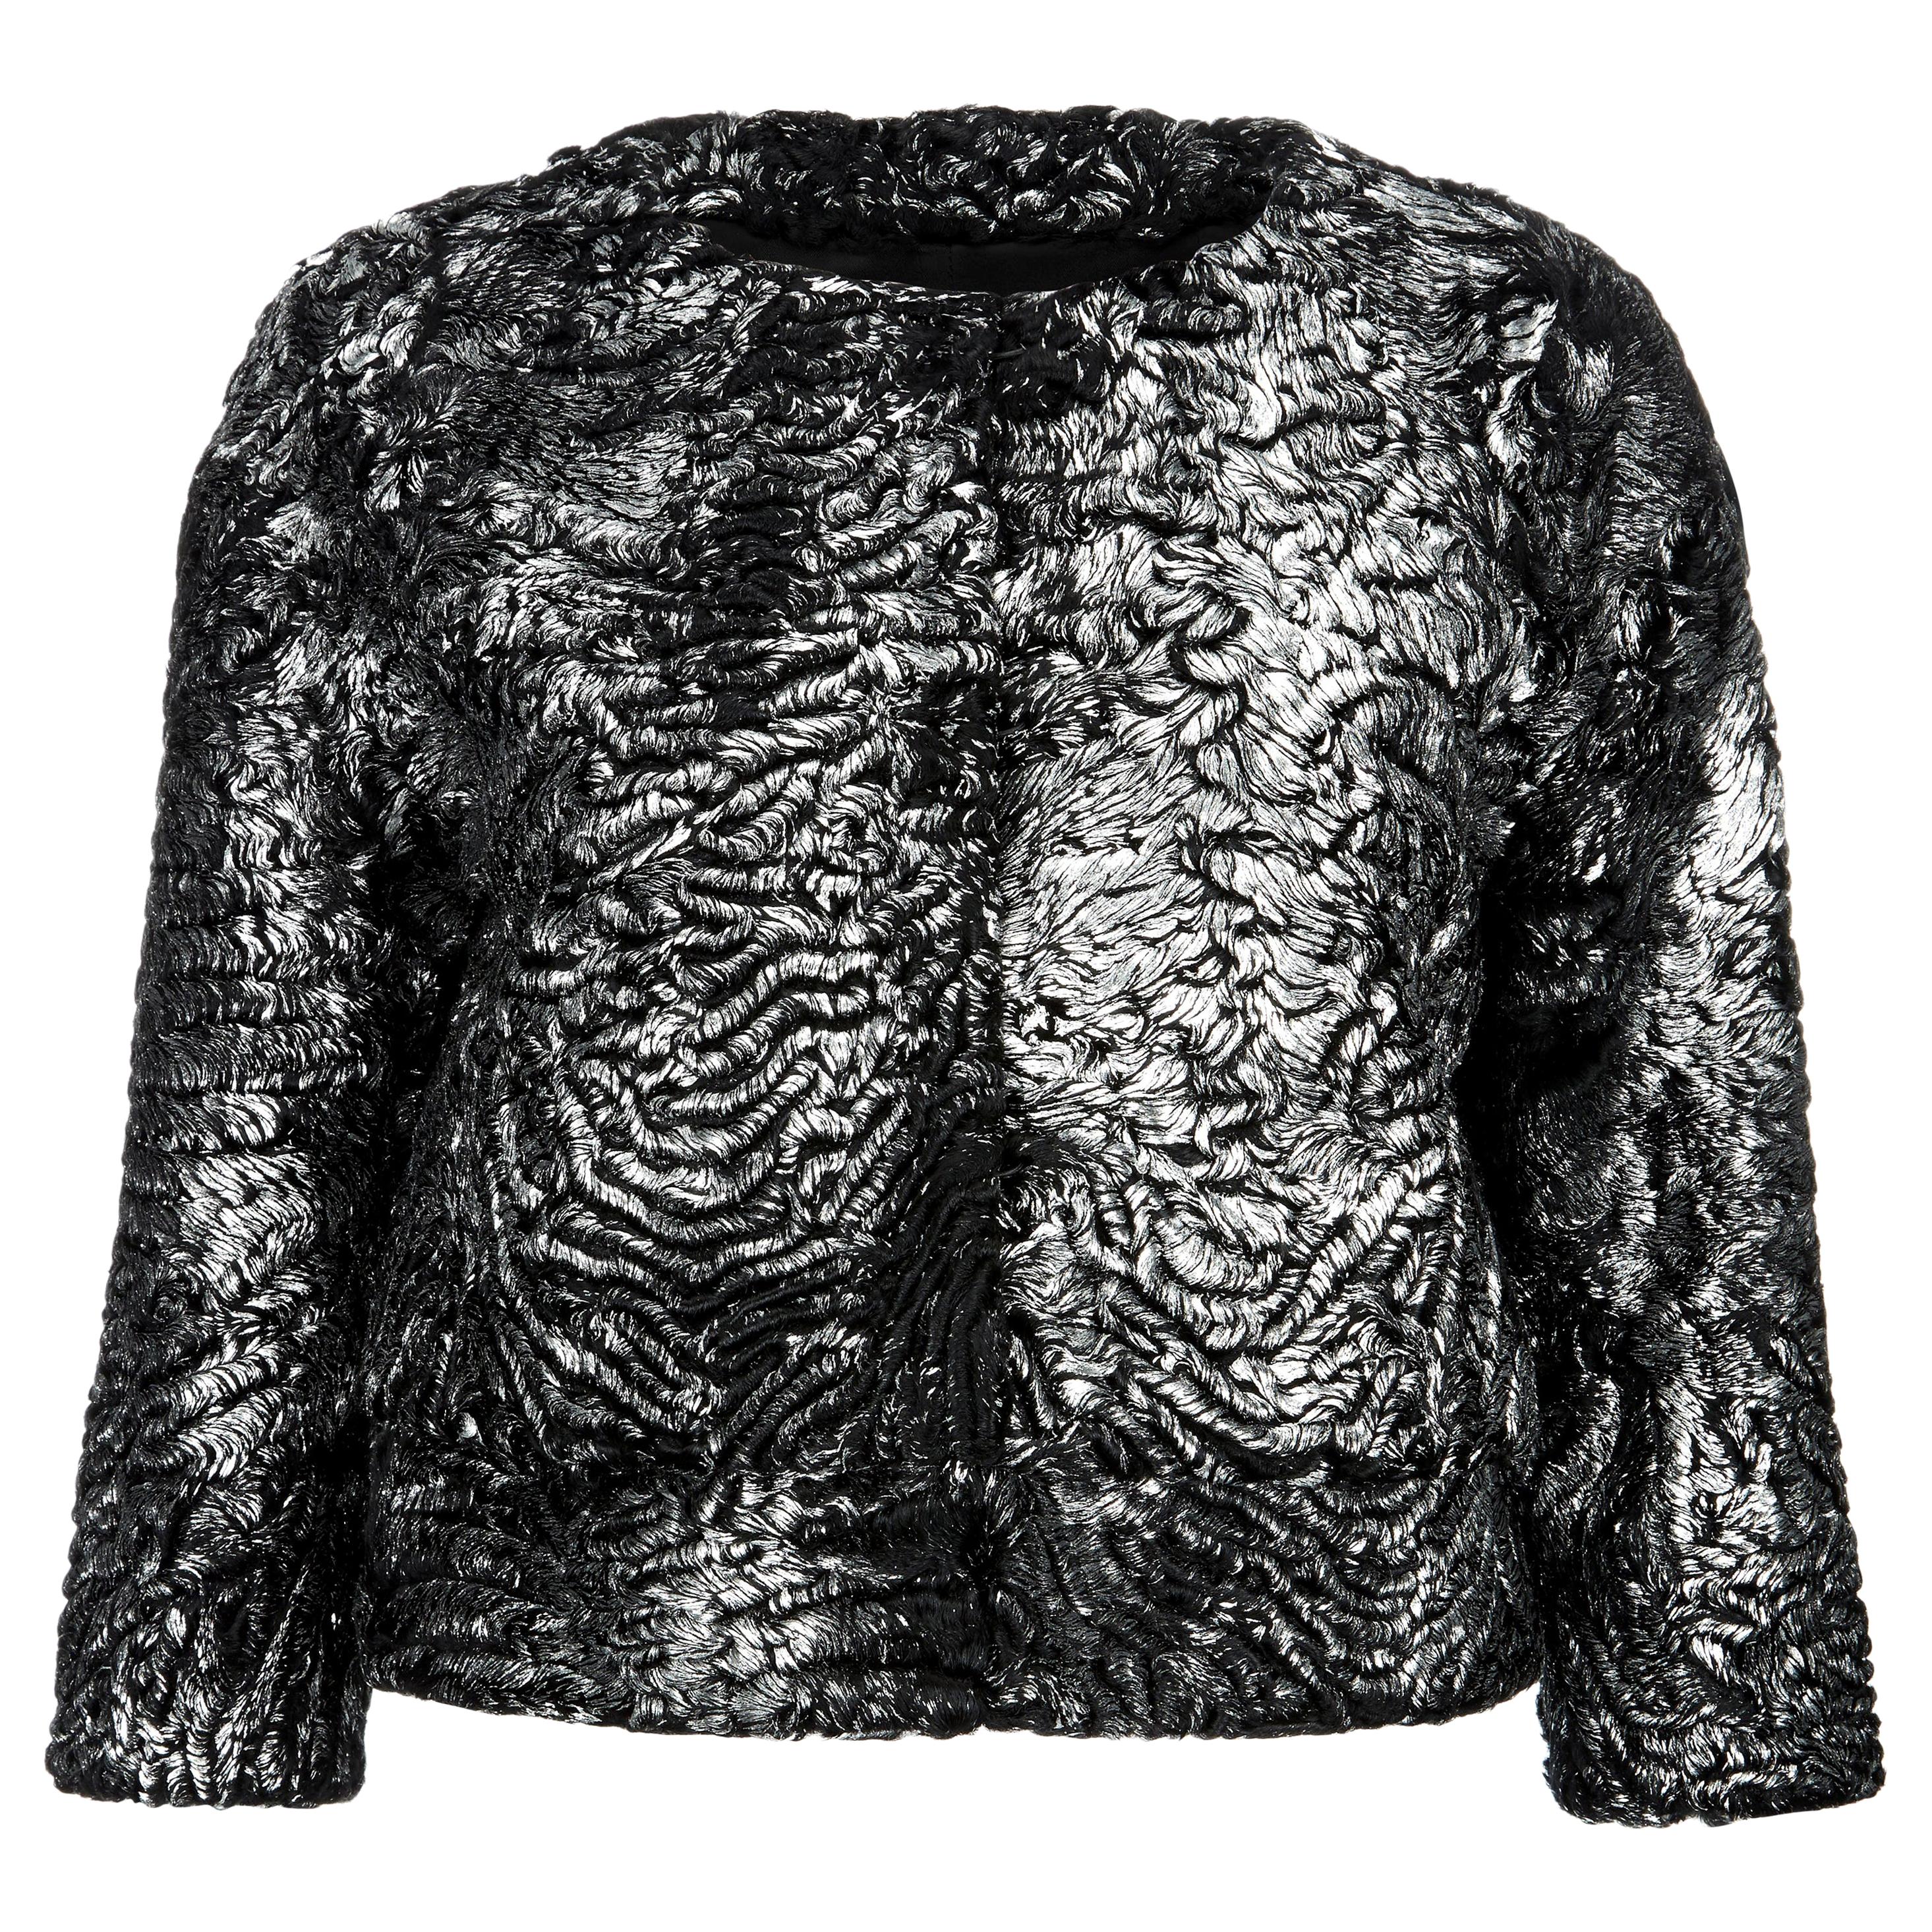 Verheyen London Cropped Jacket in Swakara Lamb Fur in Metallic Silver -Brand new